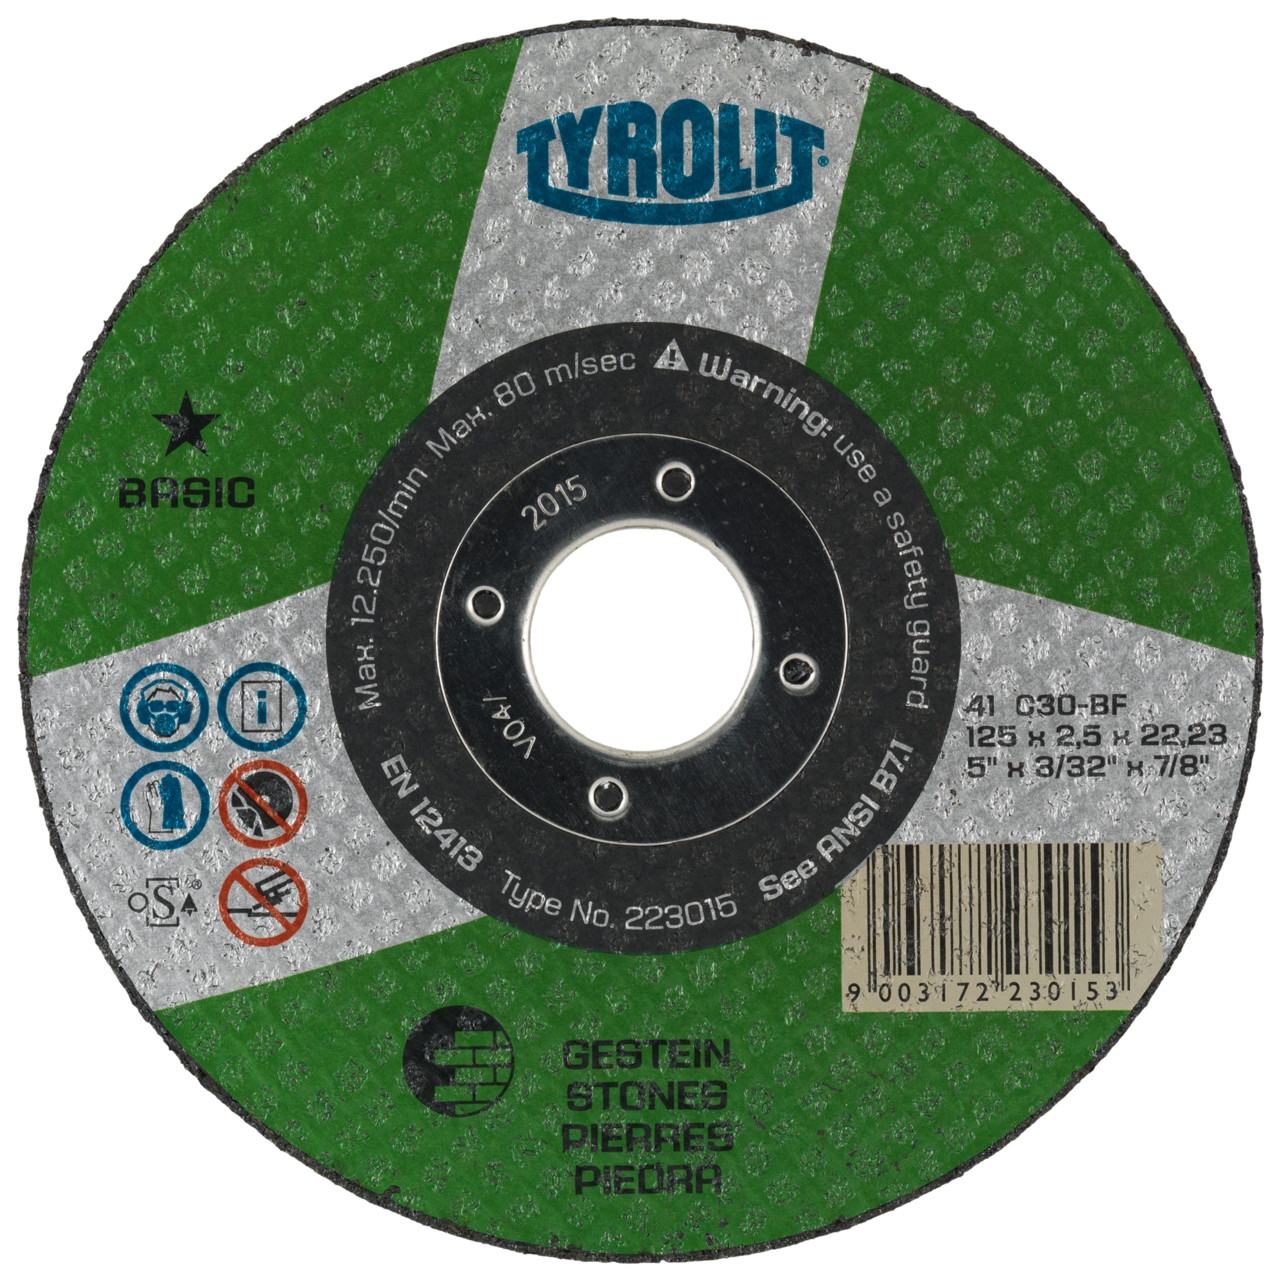 Tyrolit Cutting discs DxUxH 115x2.5x22.23 For stone, shape: 42 - offset version, Art. 223025